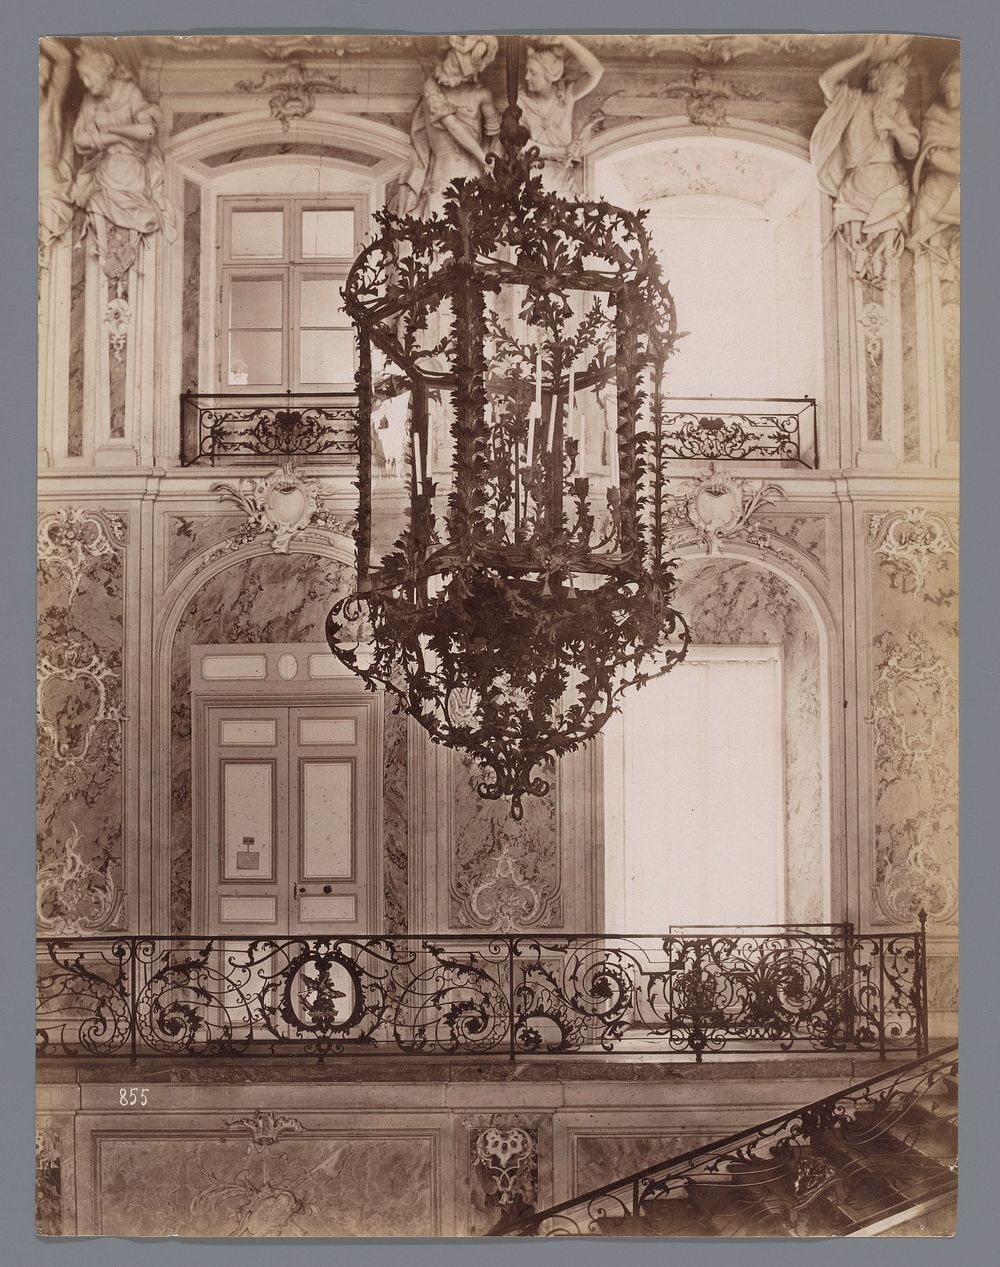 Kandelaar in trappenhuis, Neurenberg (1889) by Anselm Schmitz